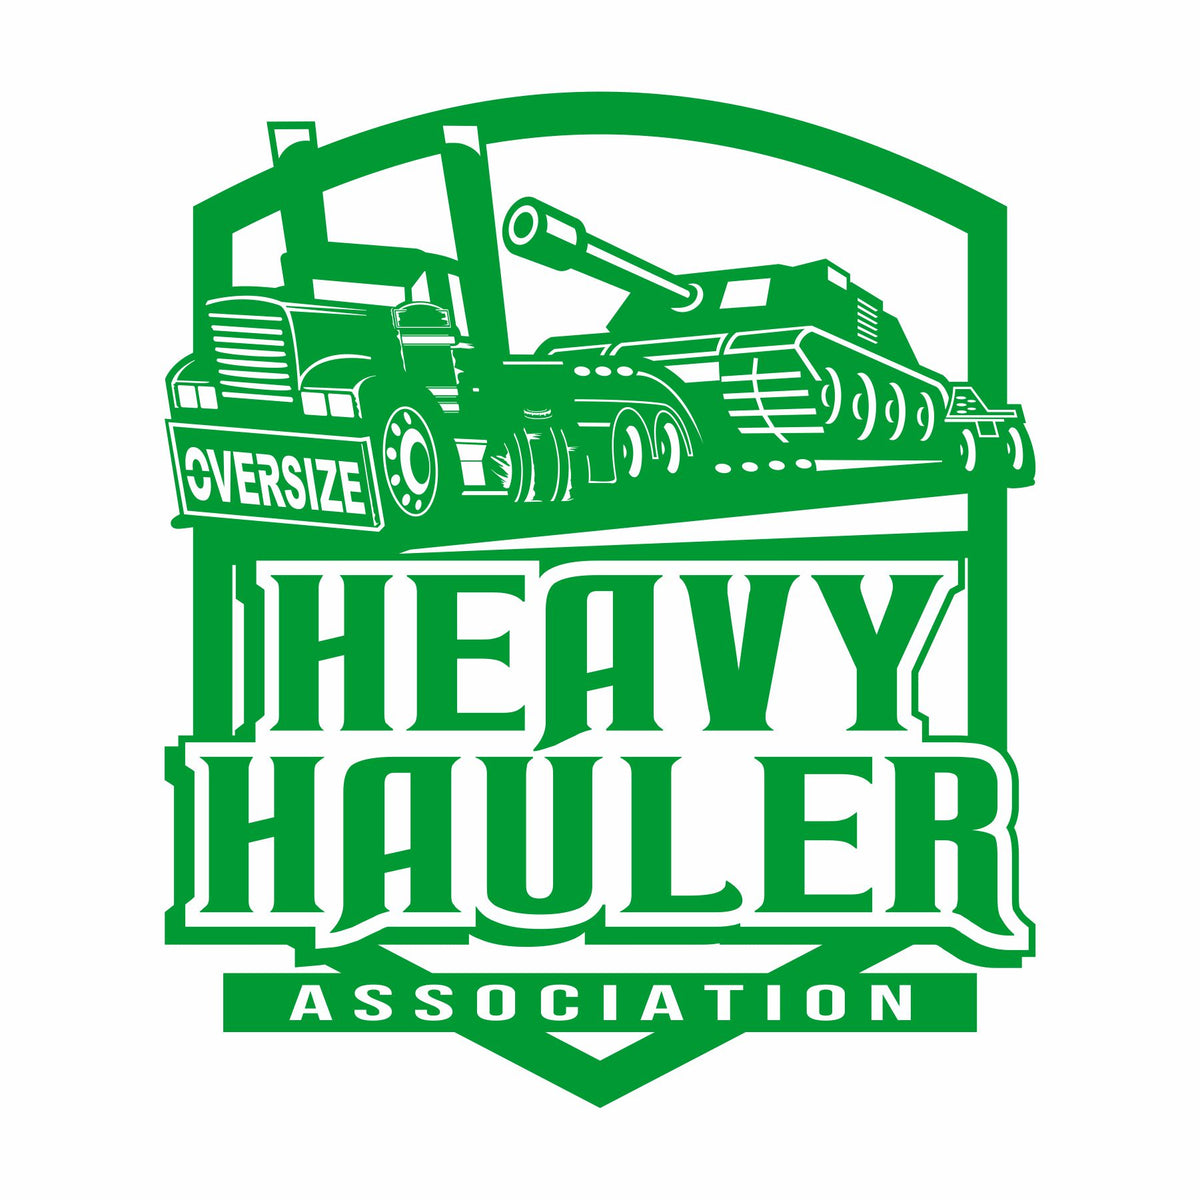 Heavy Hauler Association - Lowboy - Vinyl Decal - Free Shipping